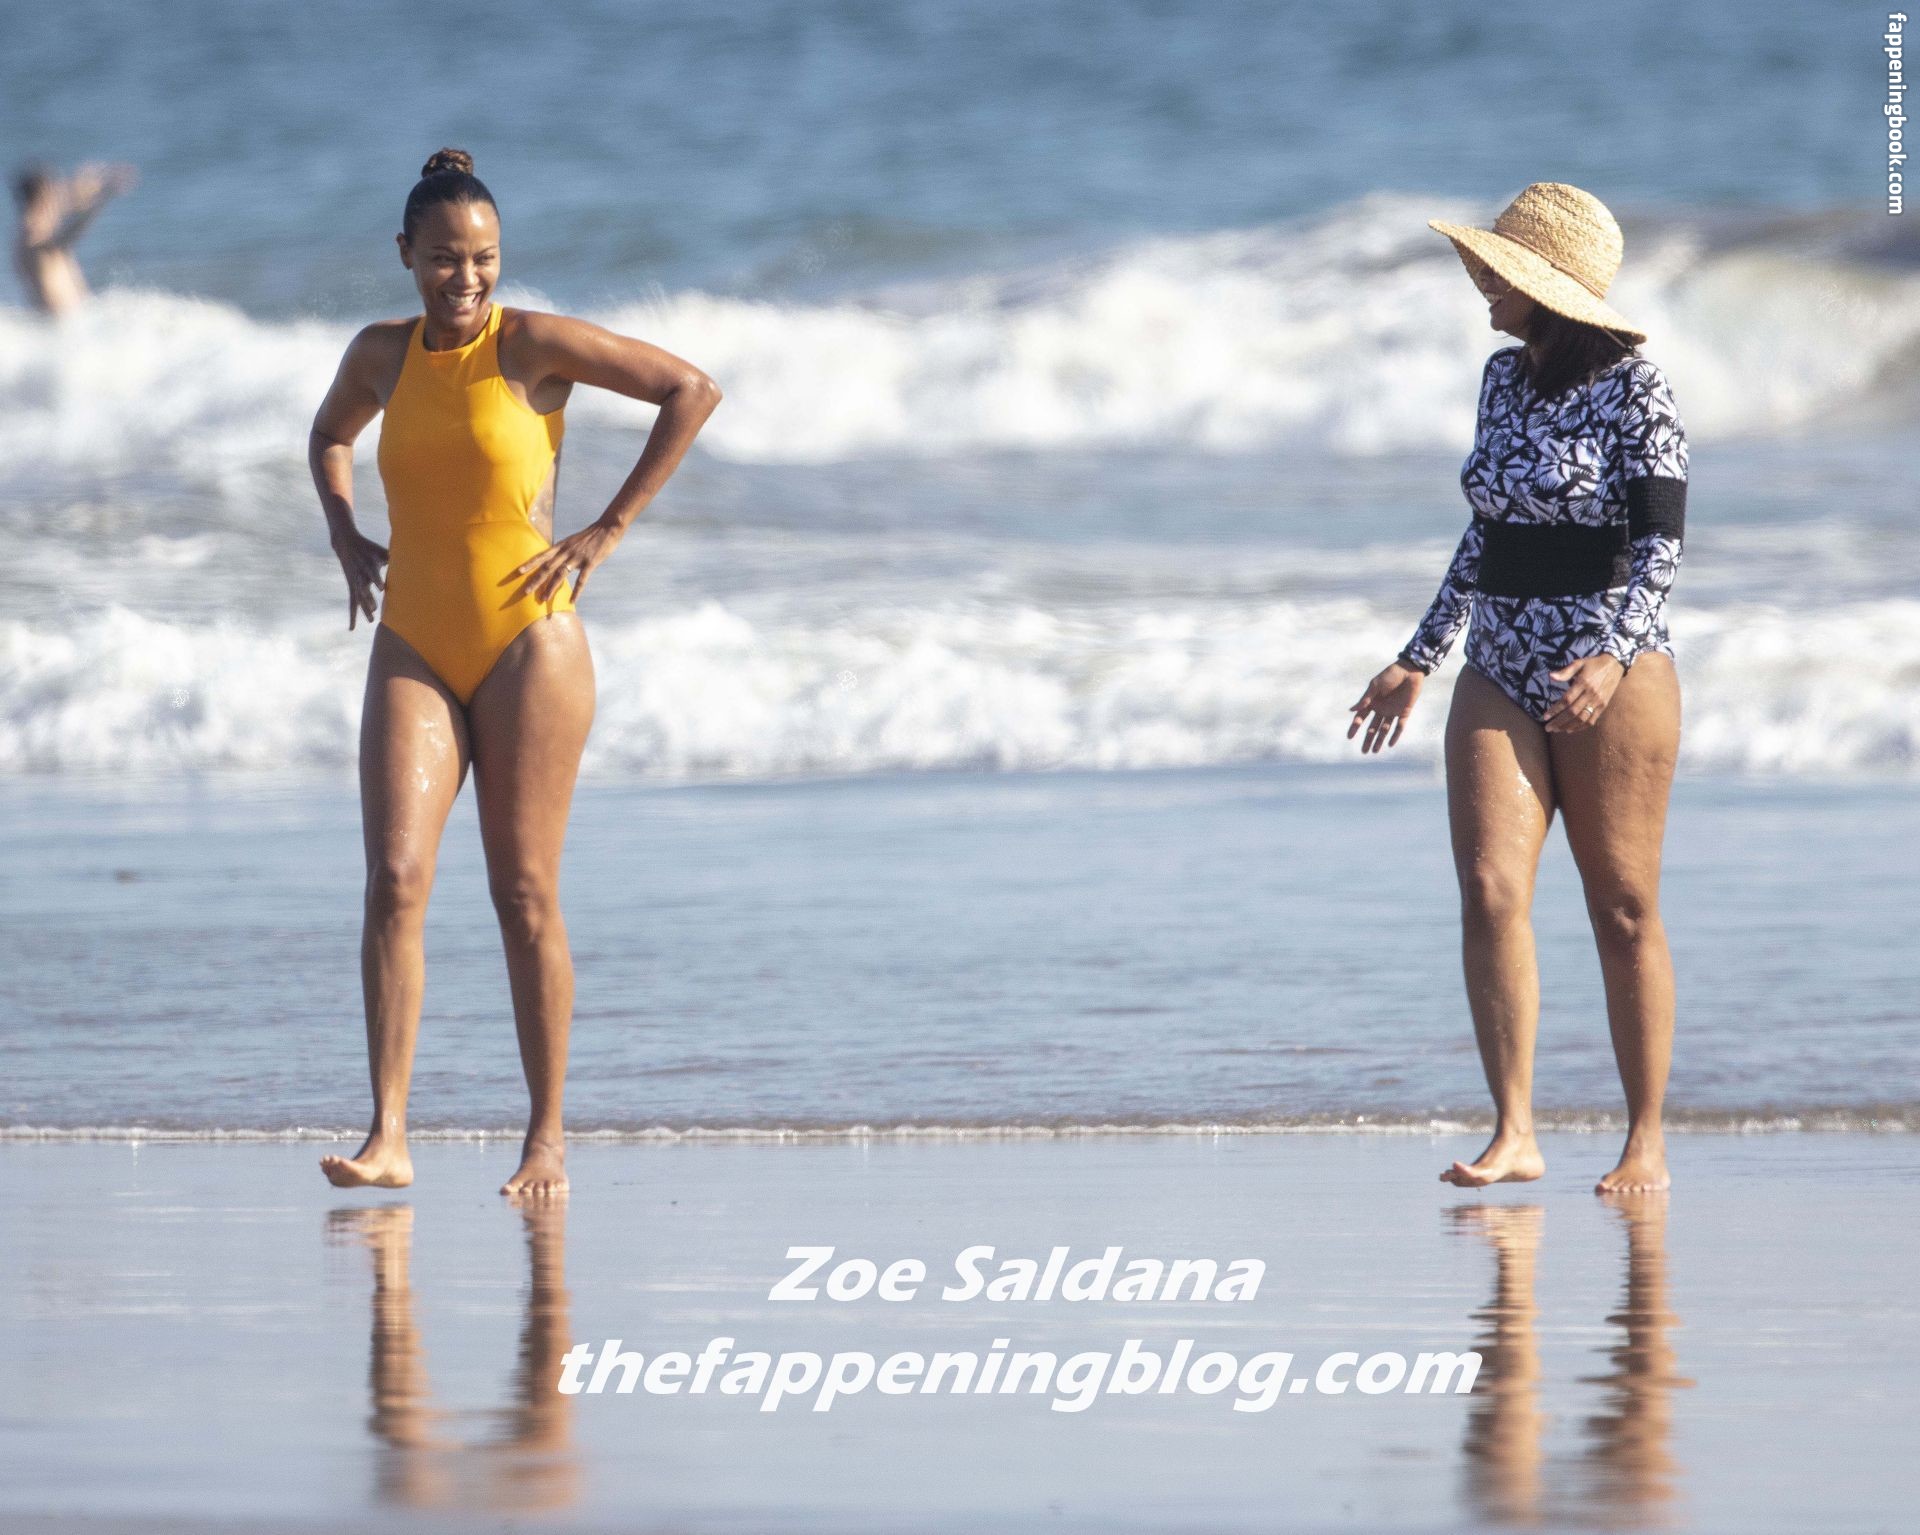 Zoe Saldana Fappening photo 5